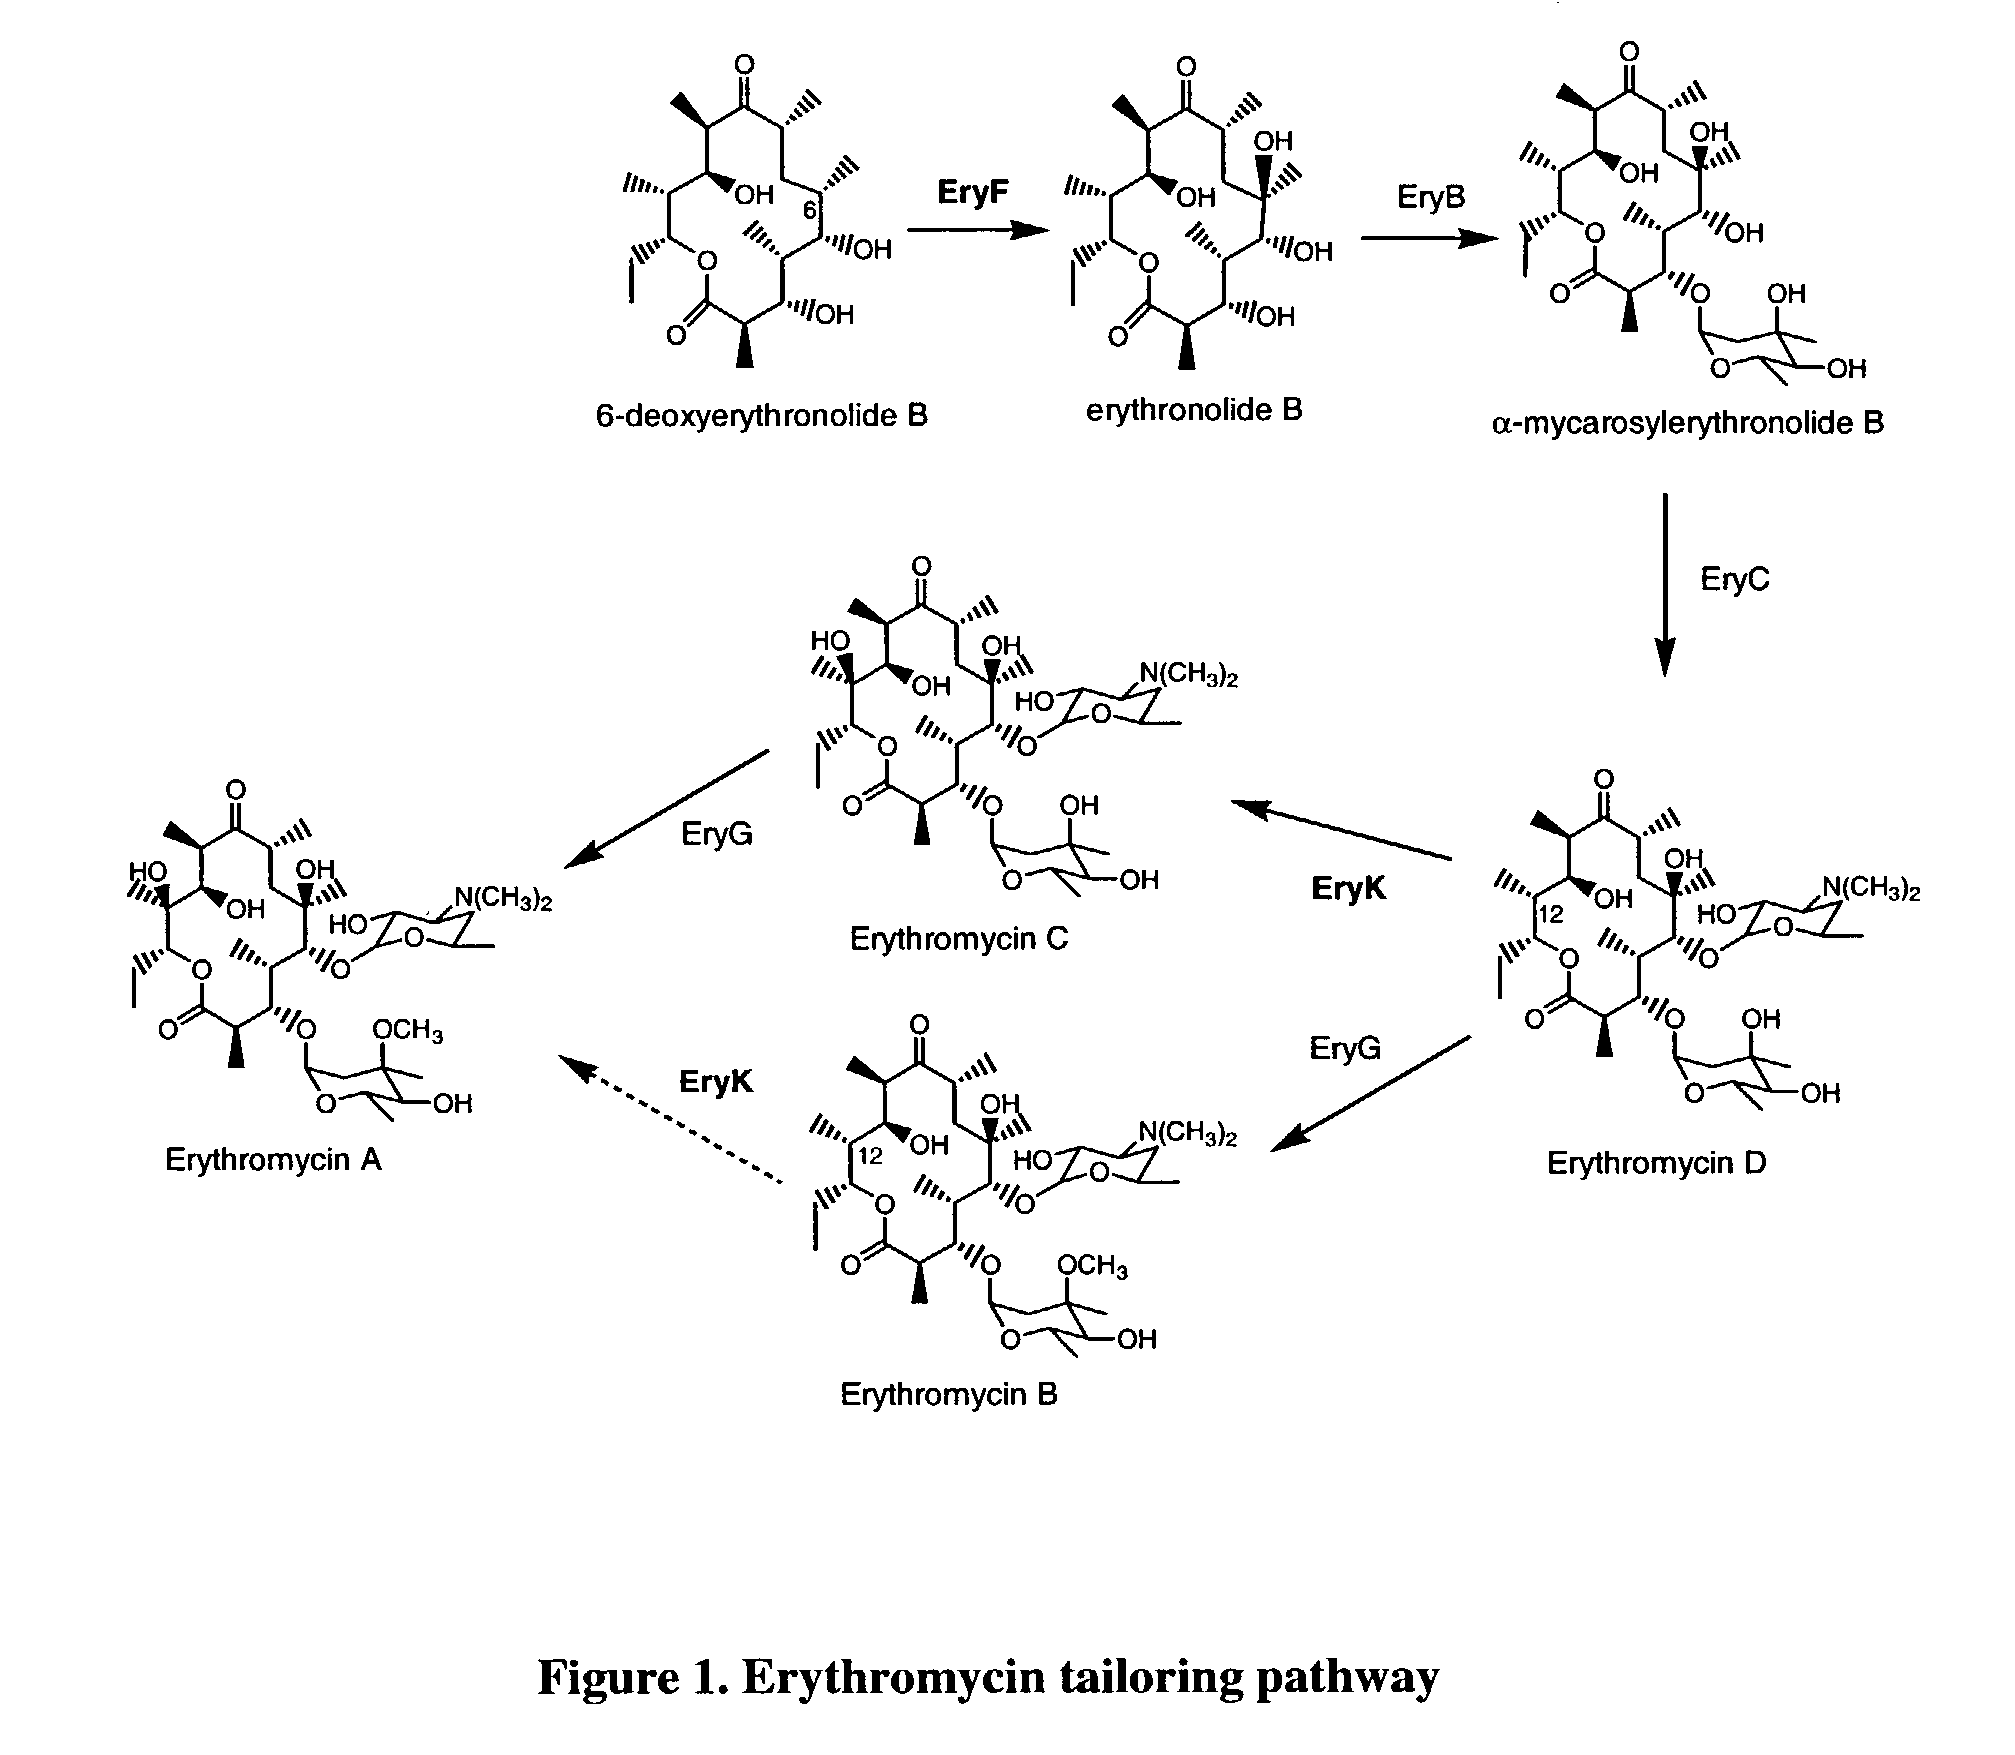 Secondary metabolite congener distribution modulation